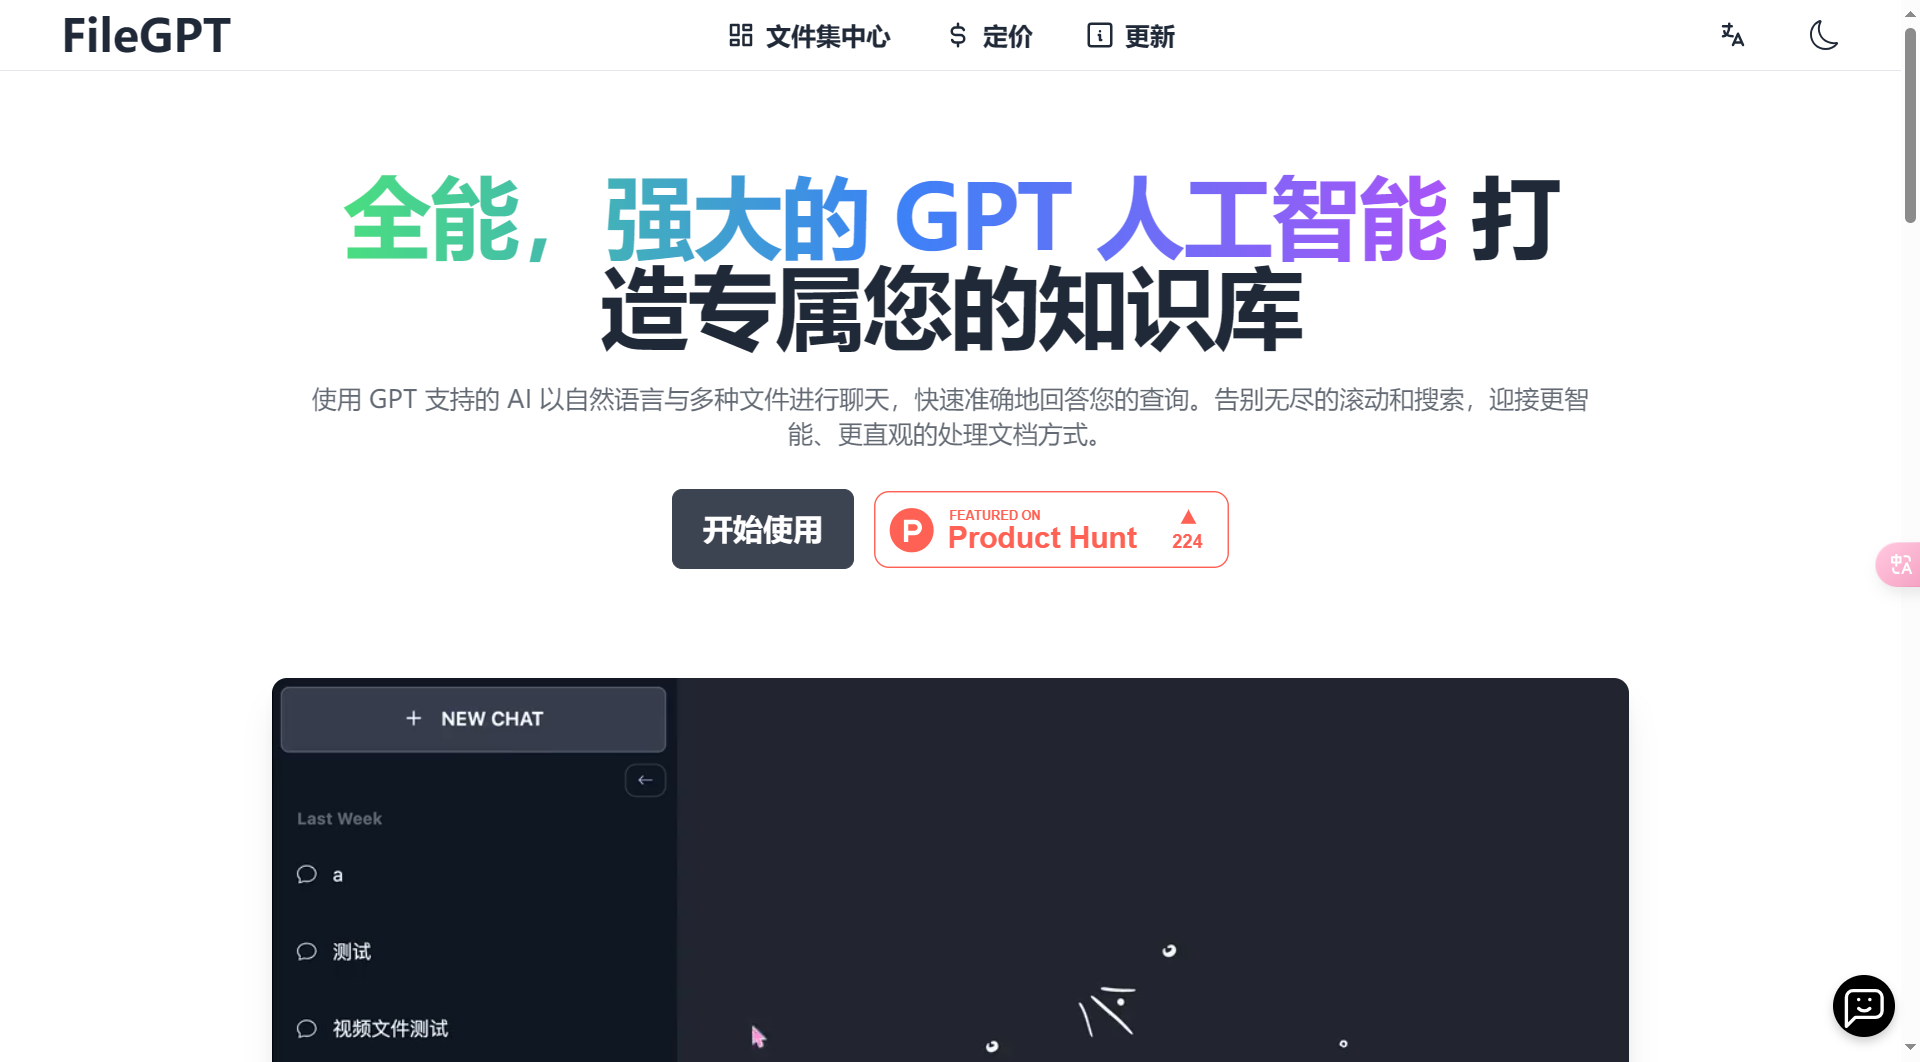 FileGPT - 全能的 GPT 人工智能 - filegpt.app.png